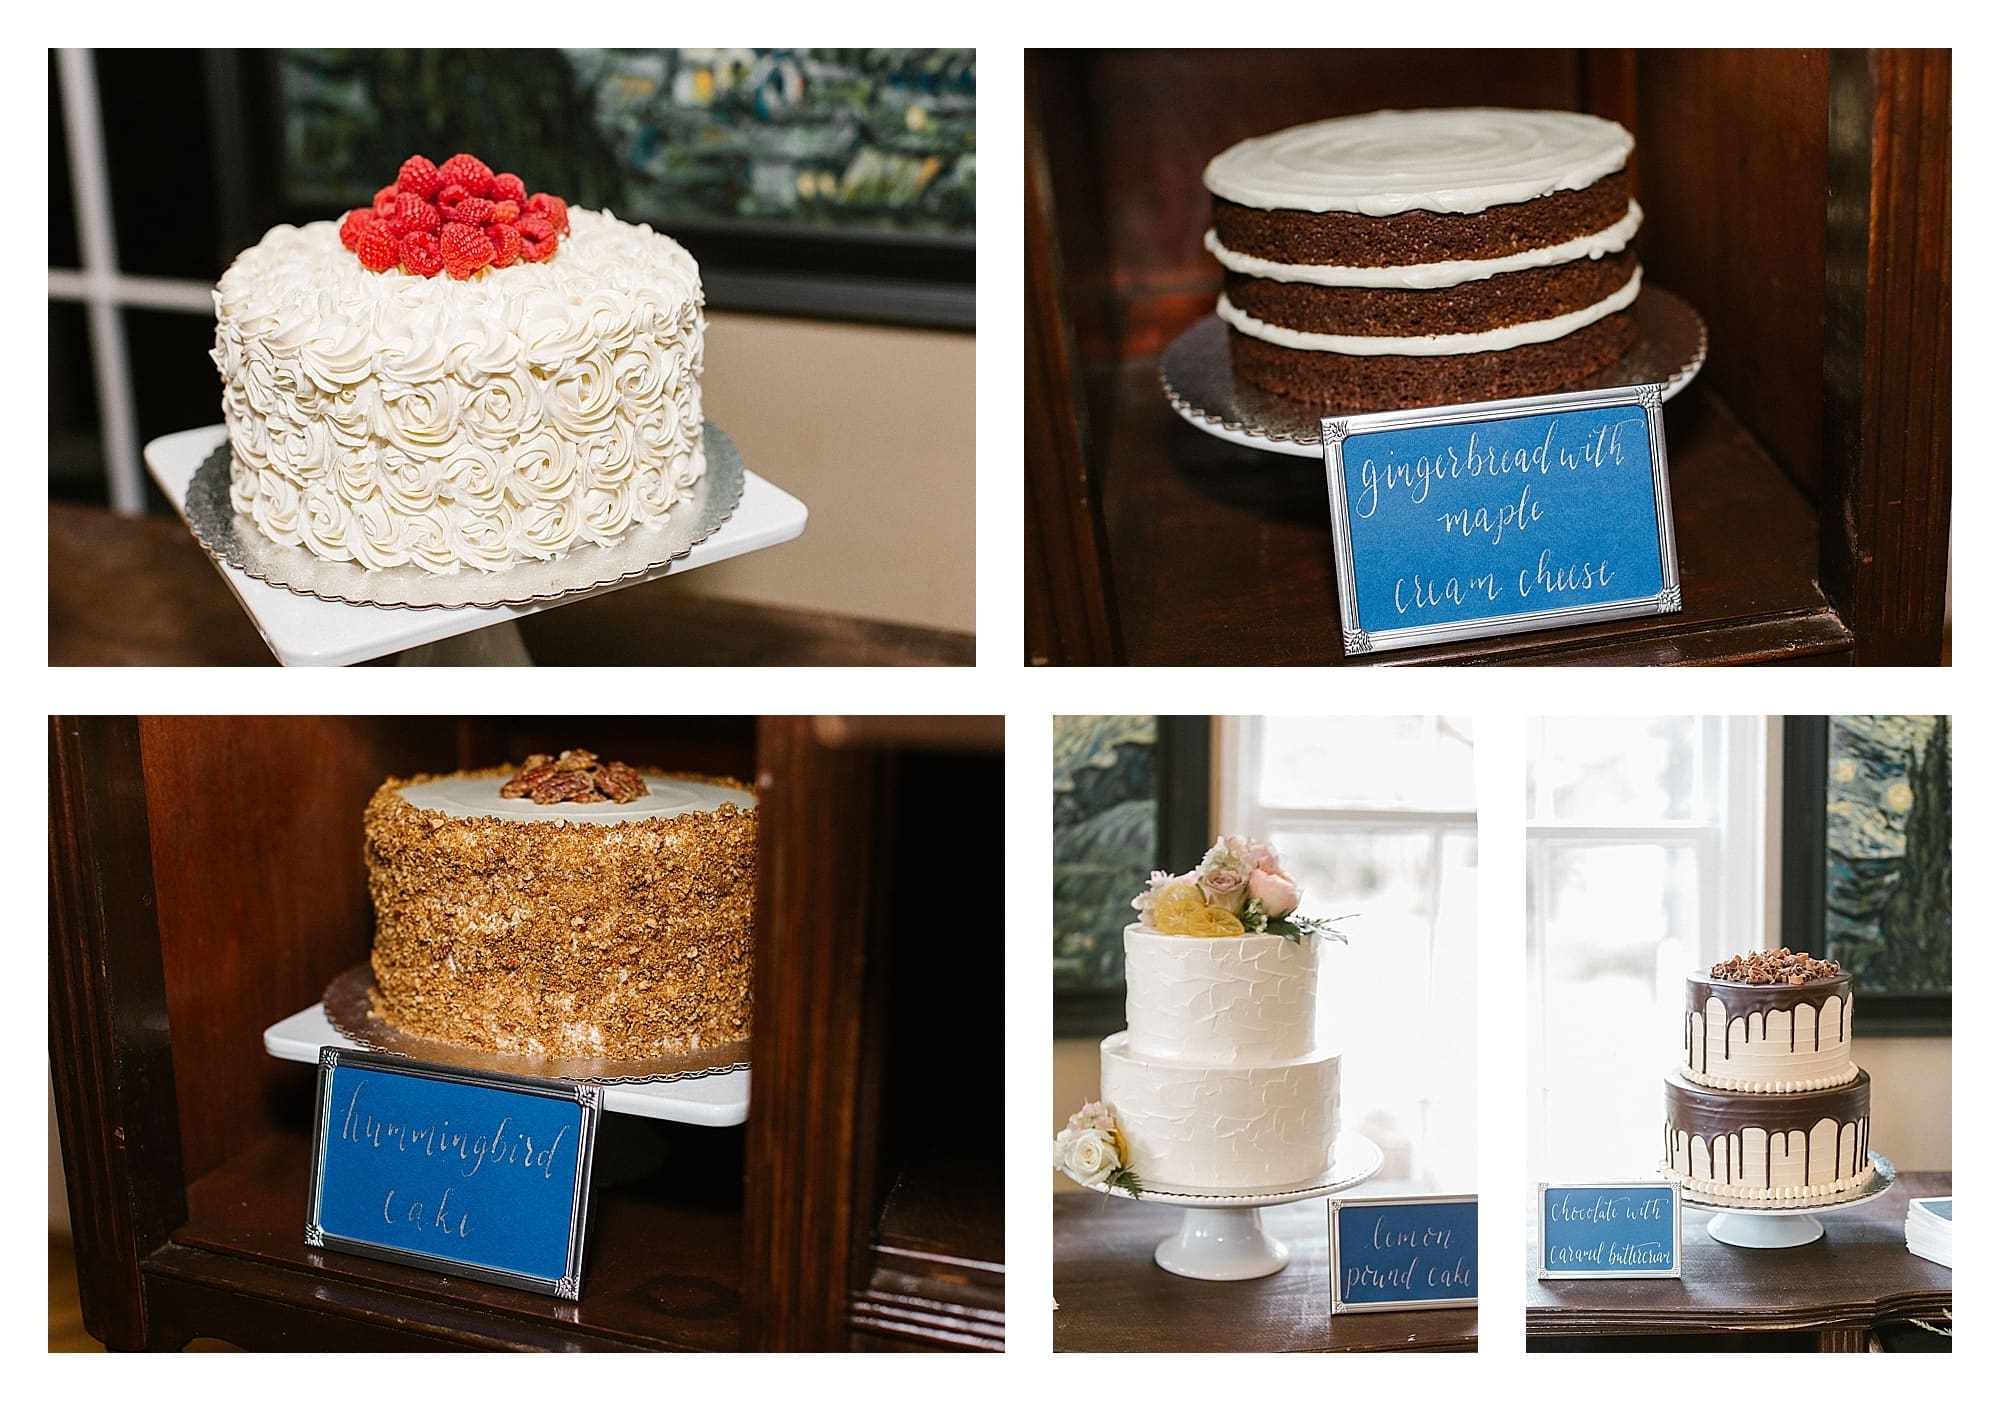 several cakes at wedding